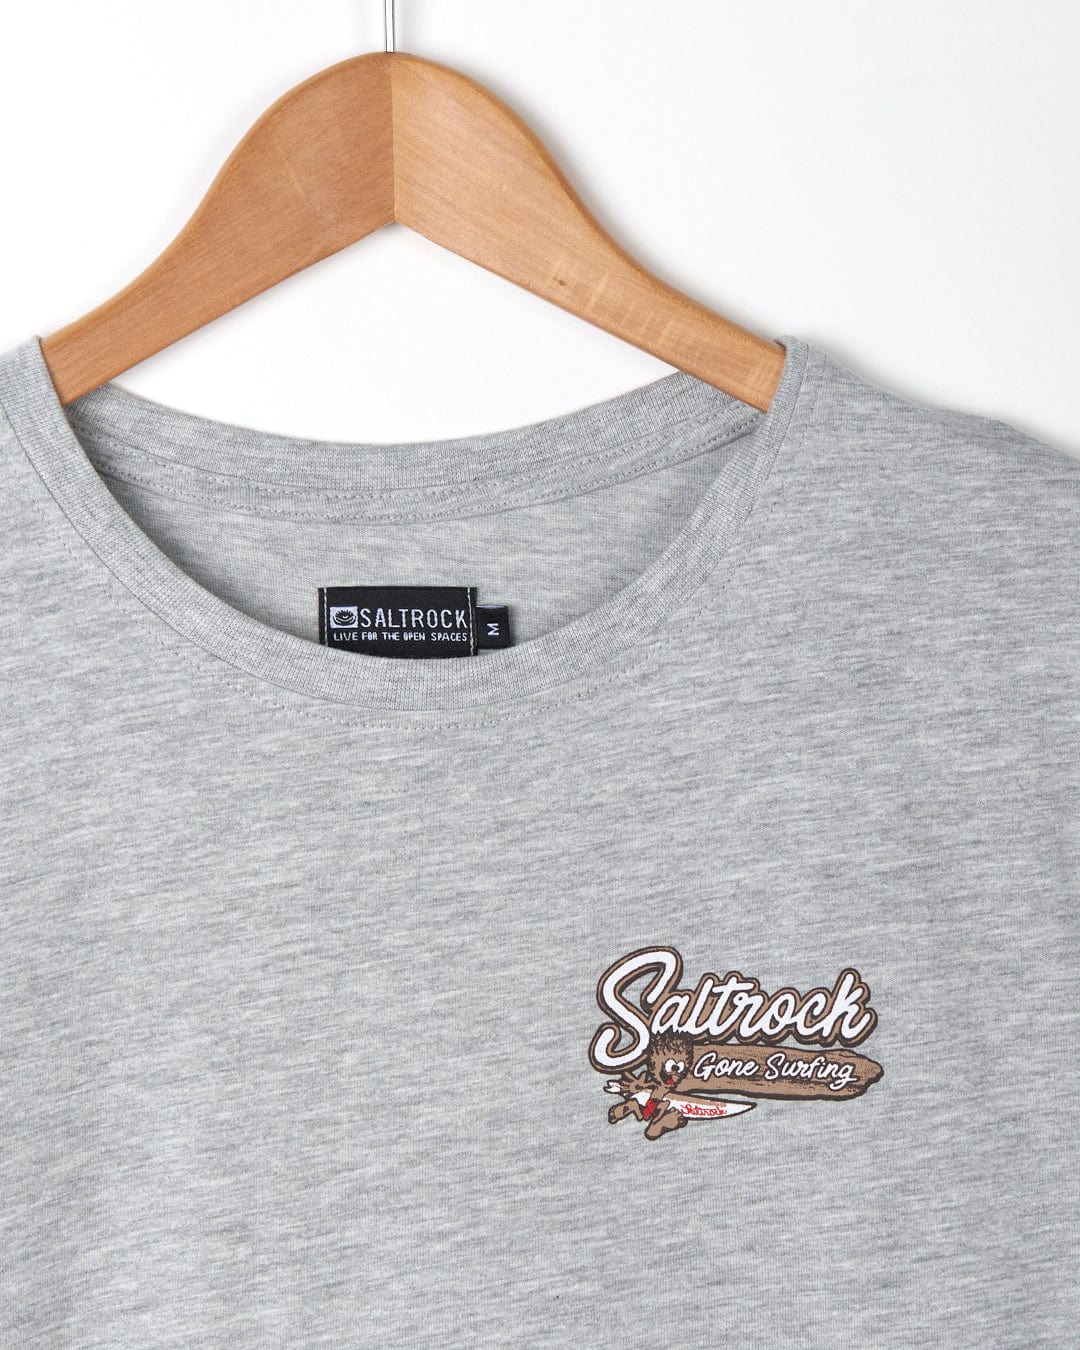 A Beach Signs Devon grey t-shirt with a Saltrock branding logo on it.